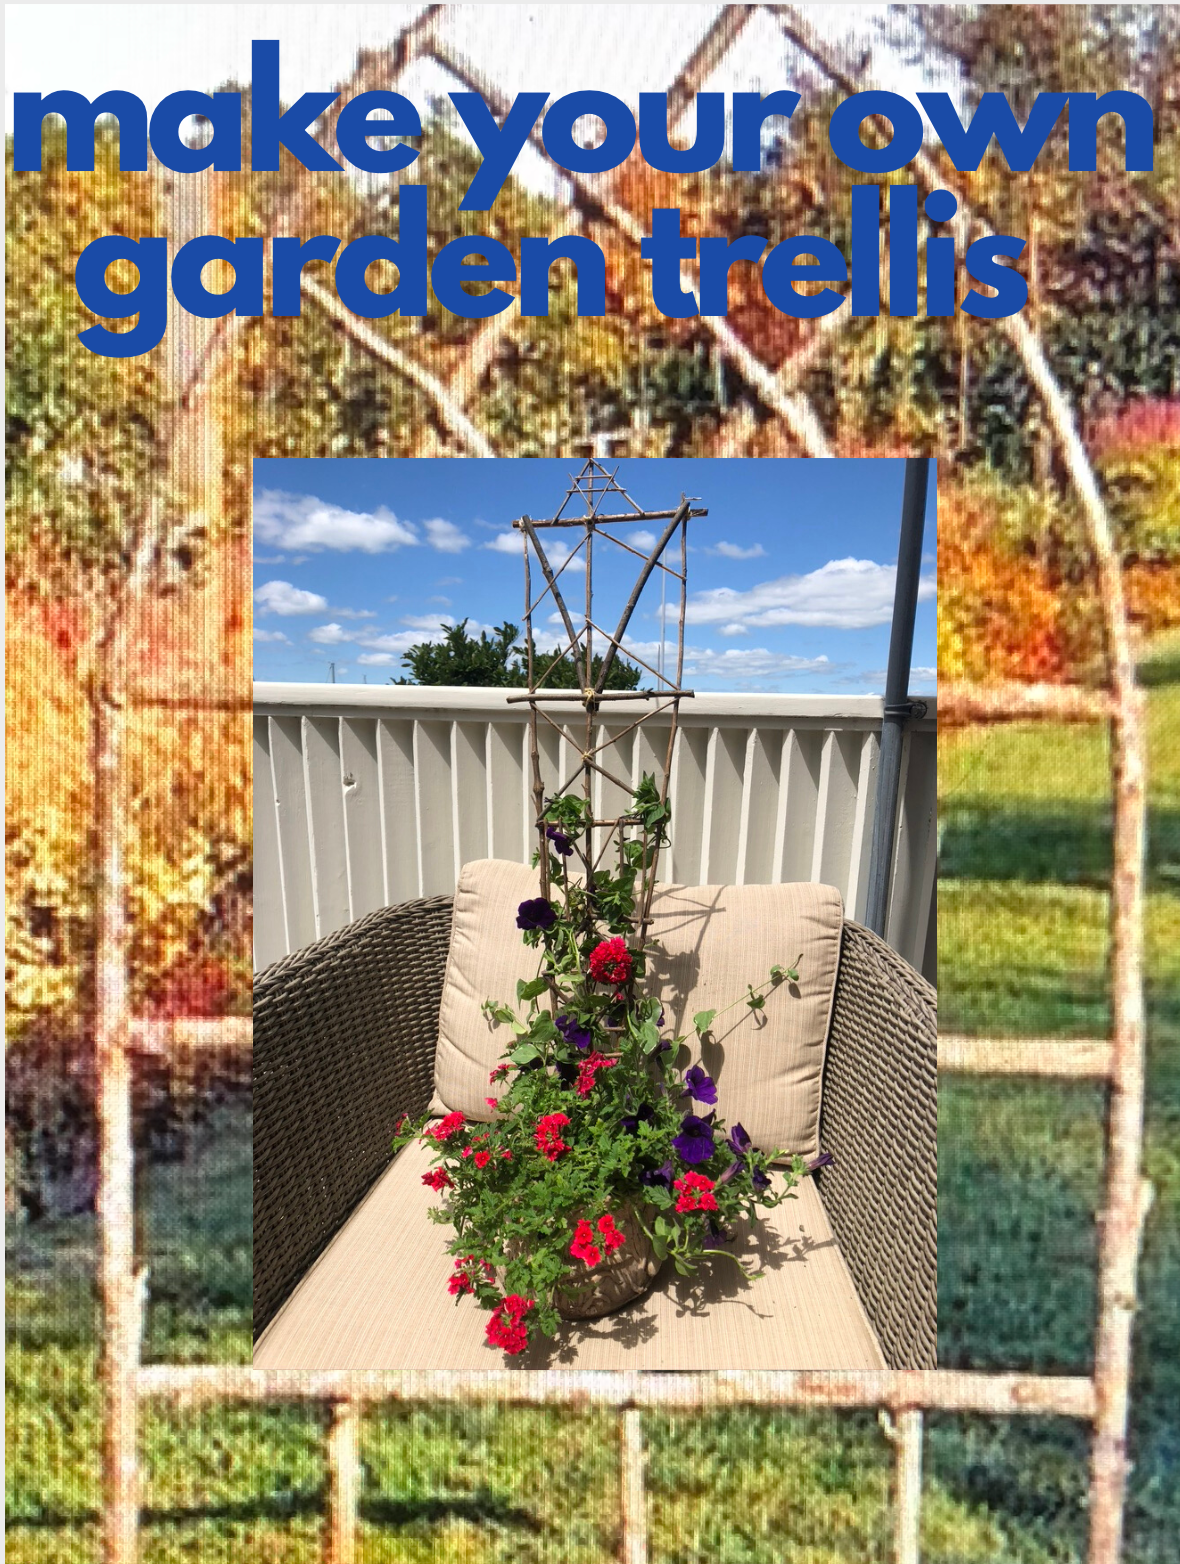 Garden Trellis